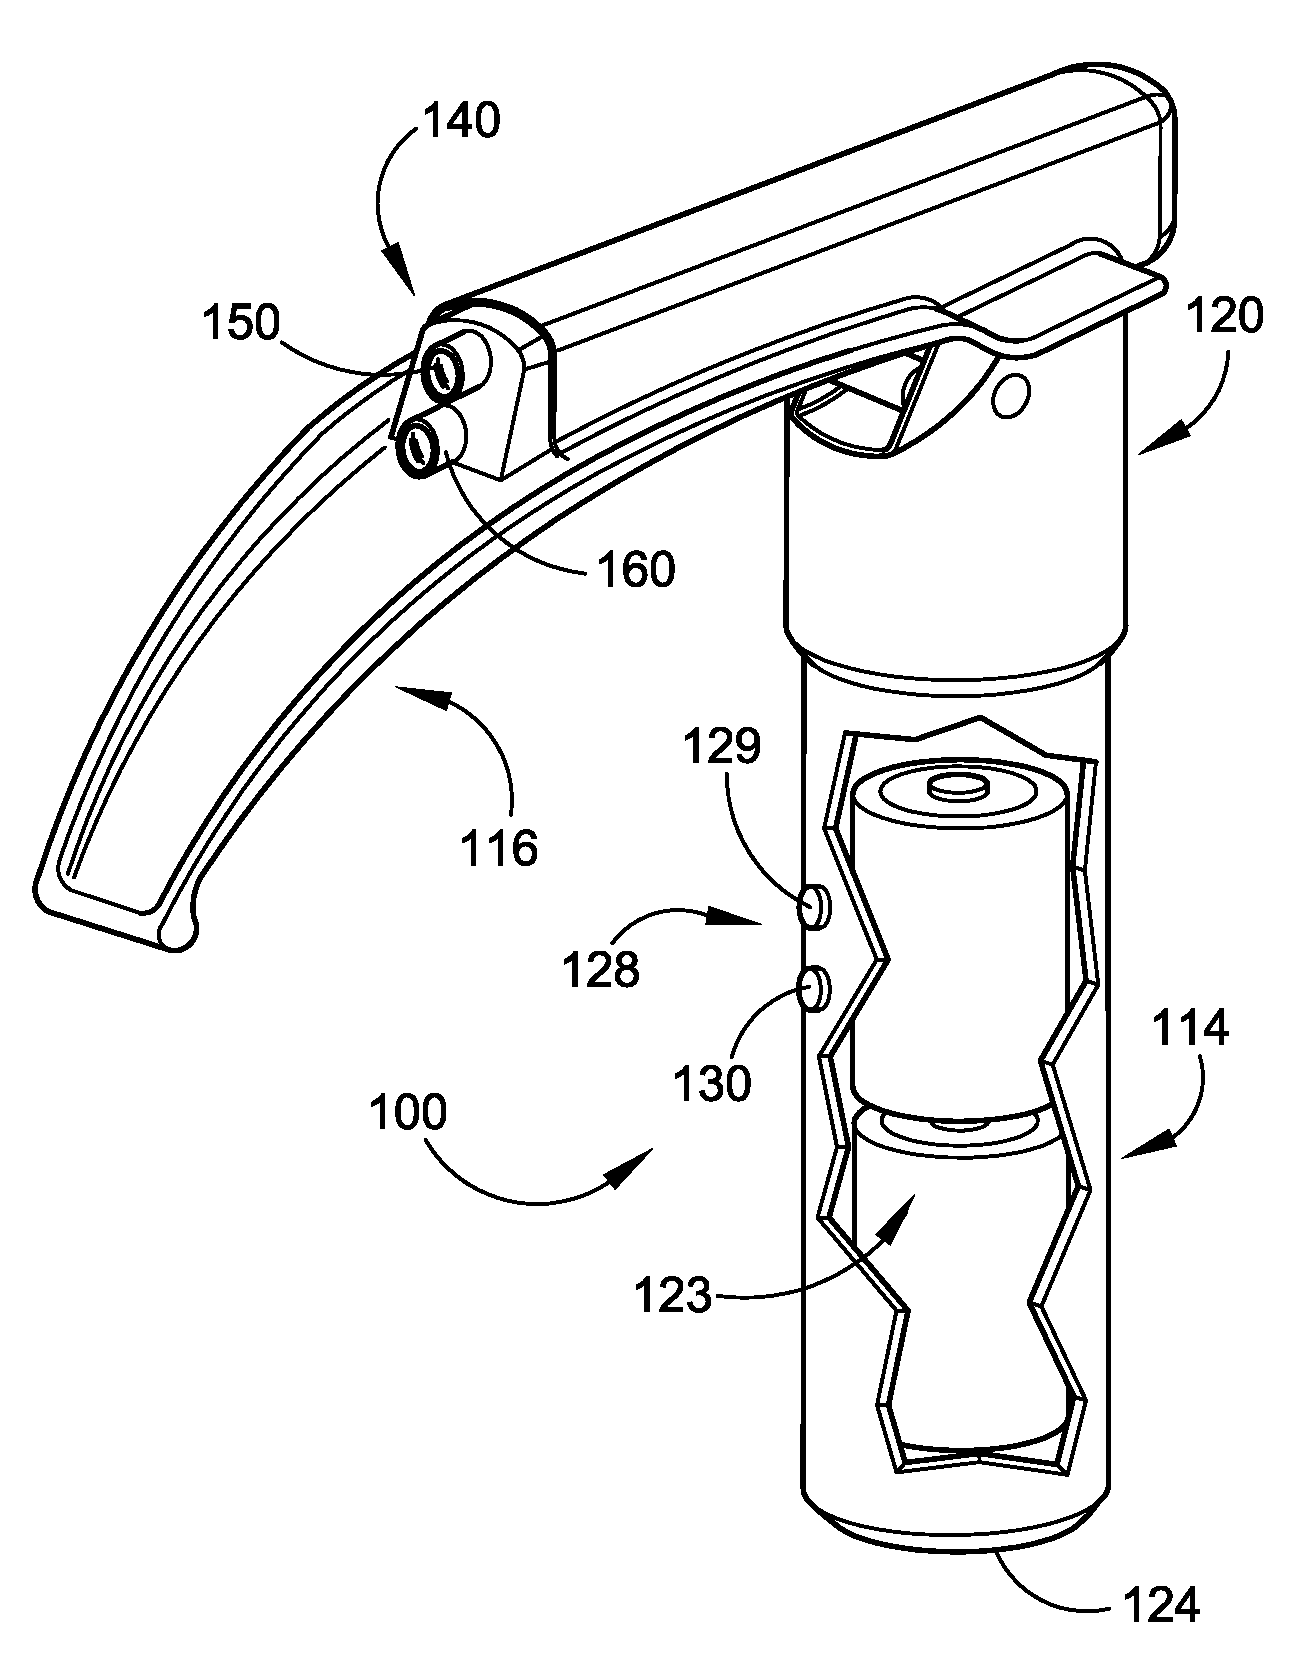 Laryngoscope Blade and Method of Use